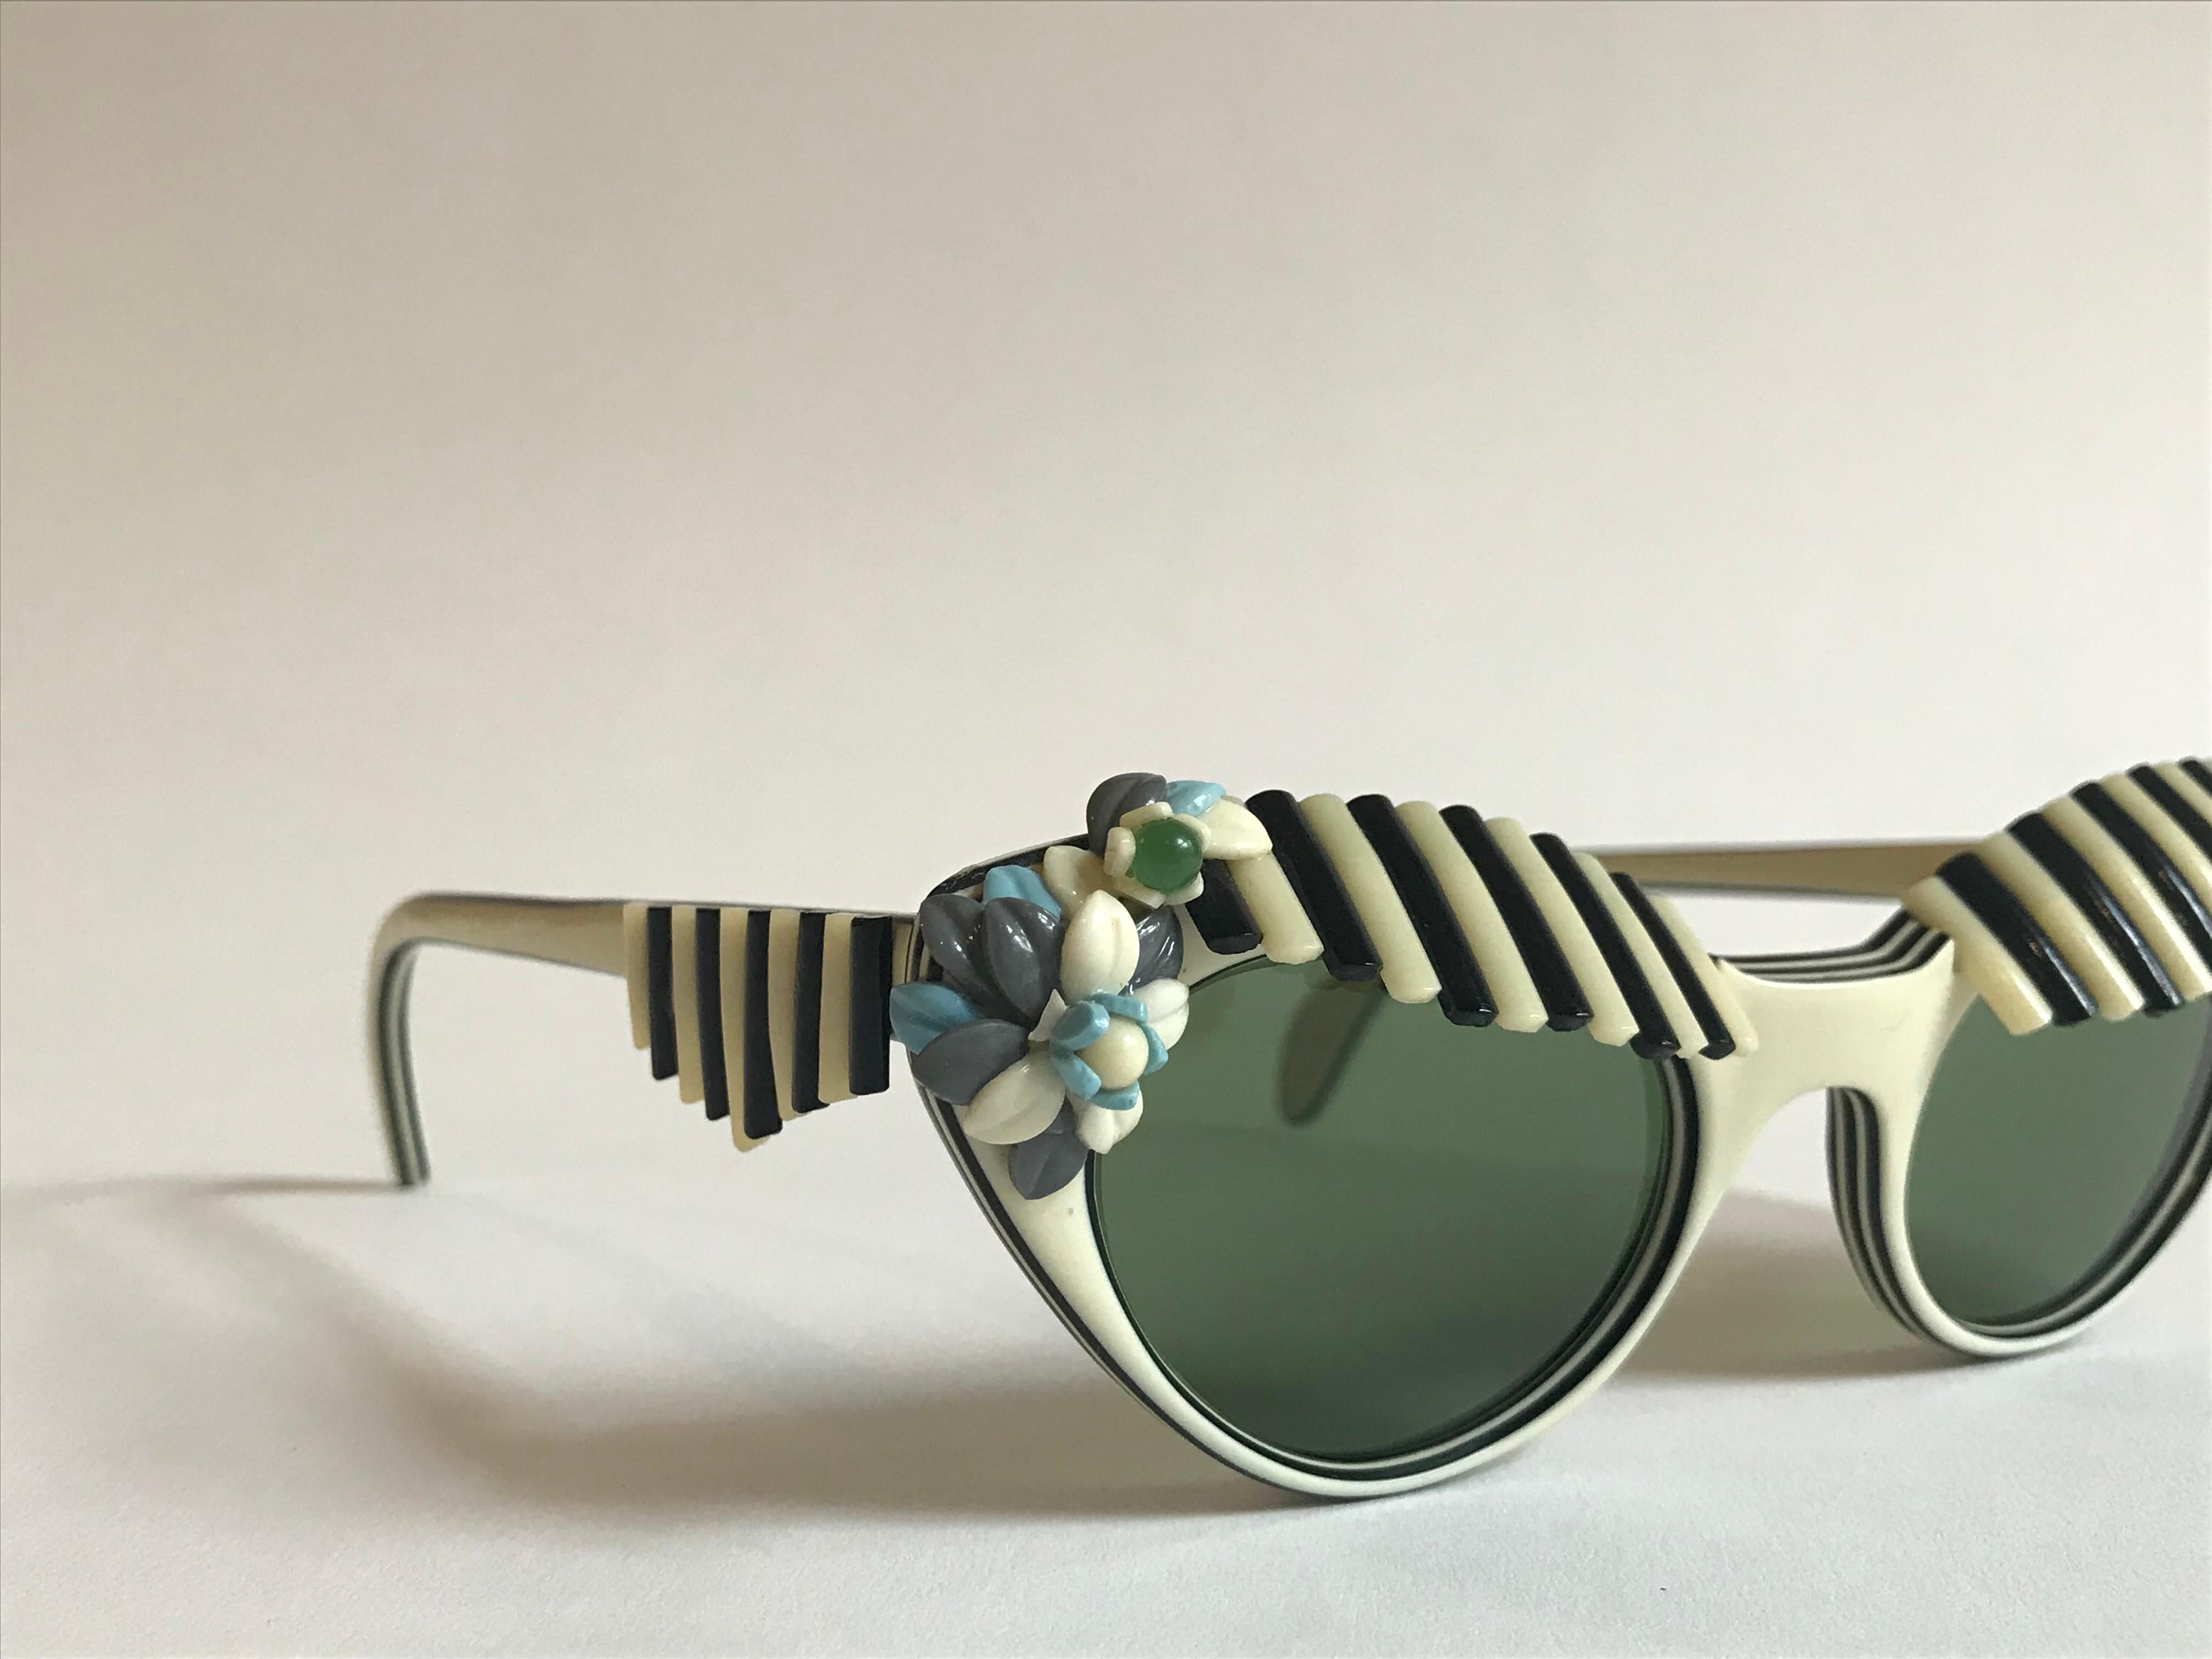 Schiaparelli Cabana Floral Cat Eye Sunglasses in Creamy White and Black, 1950s  1